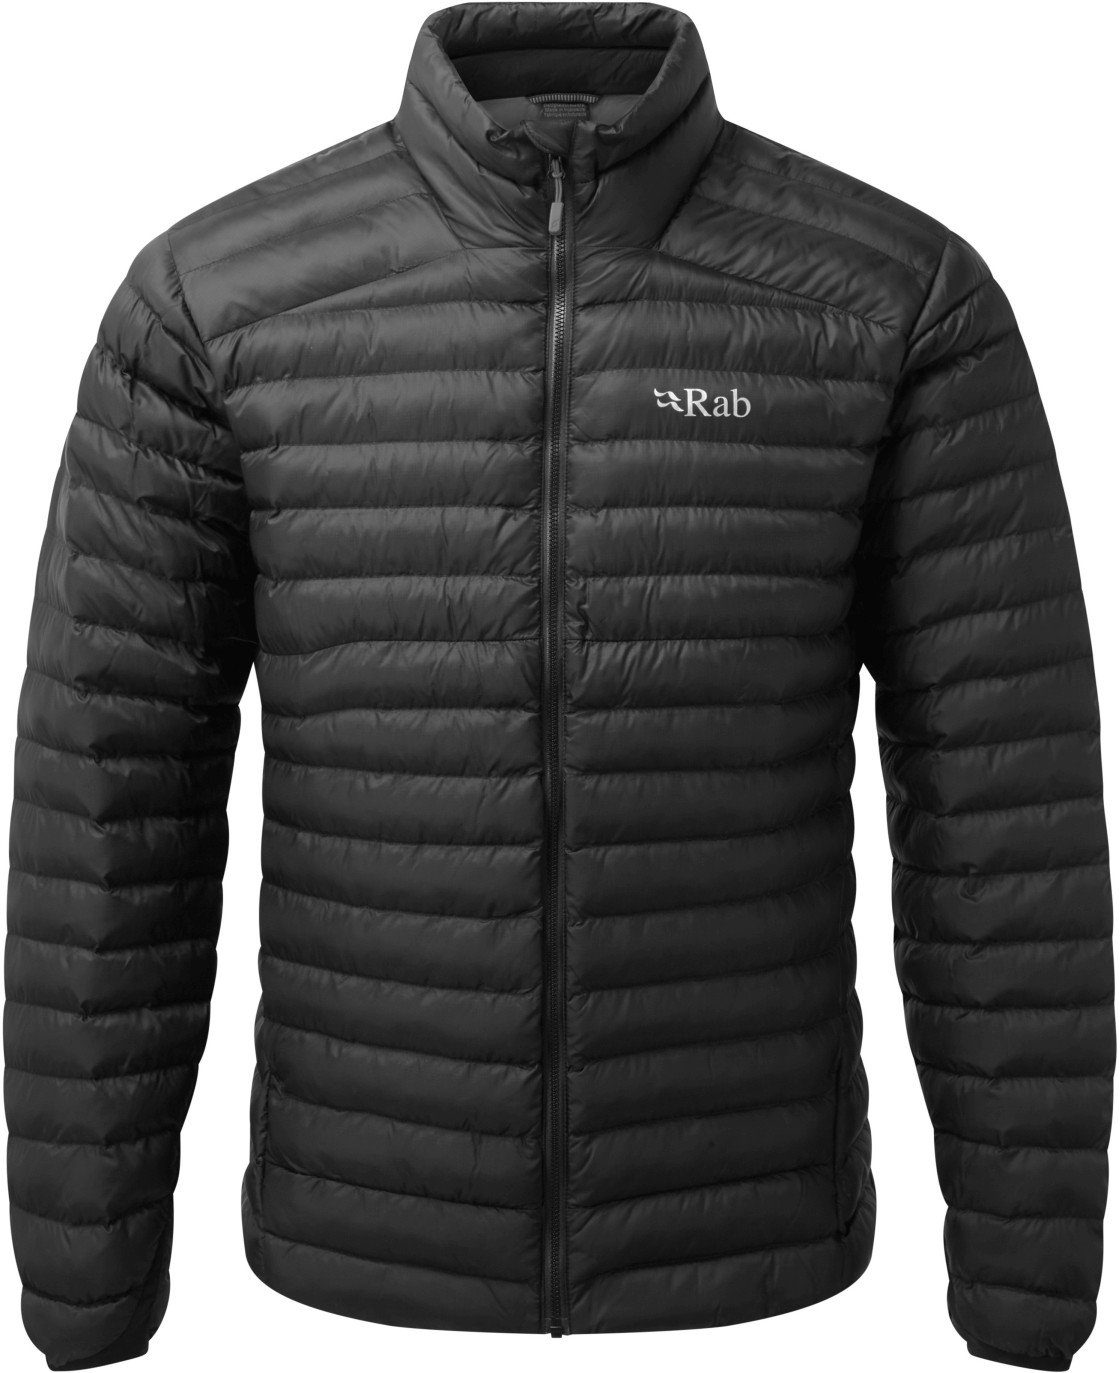 Rab Winterjacke Cirrus Jacket black